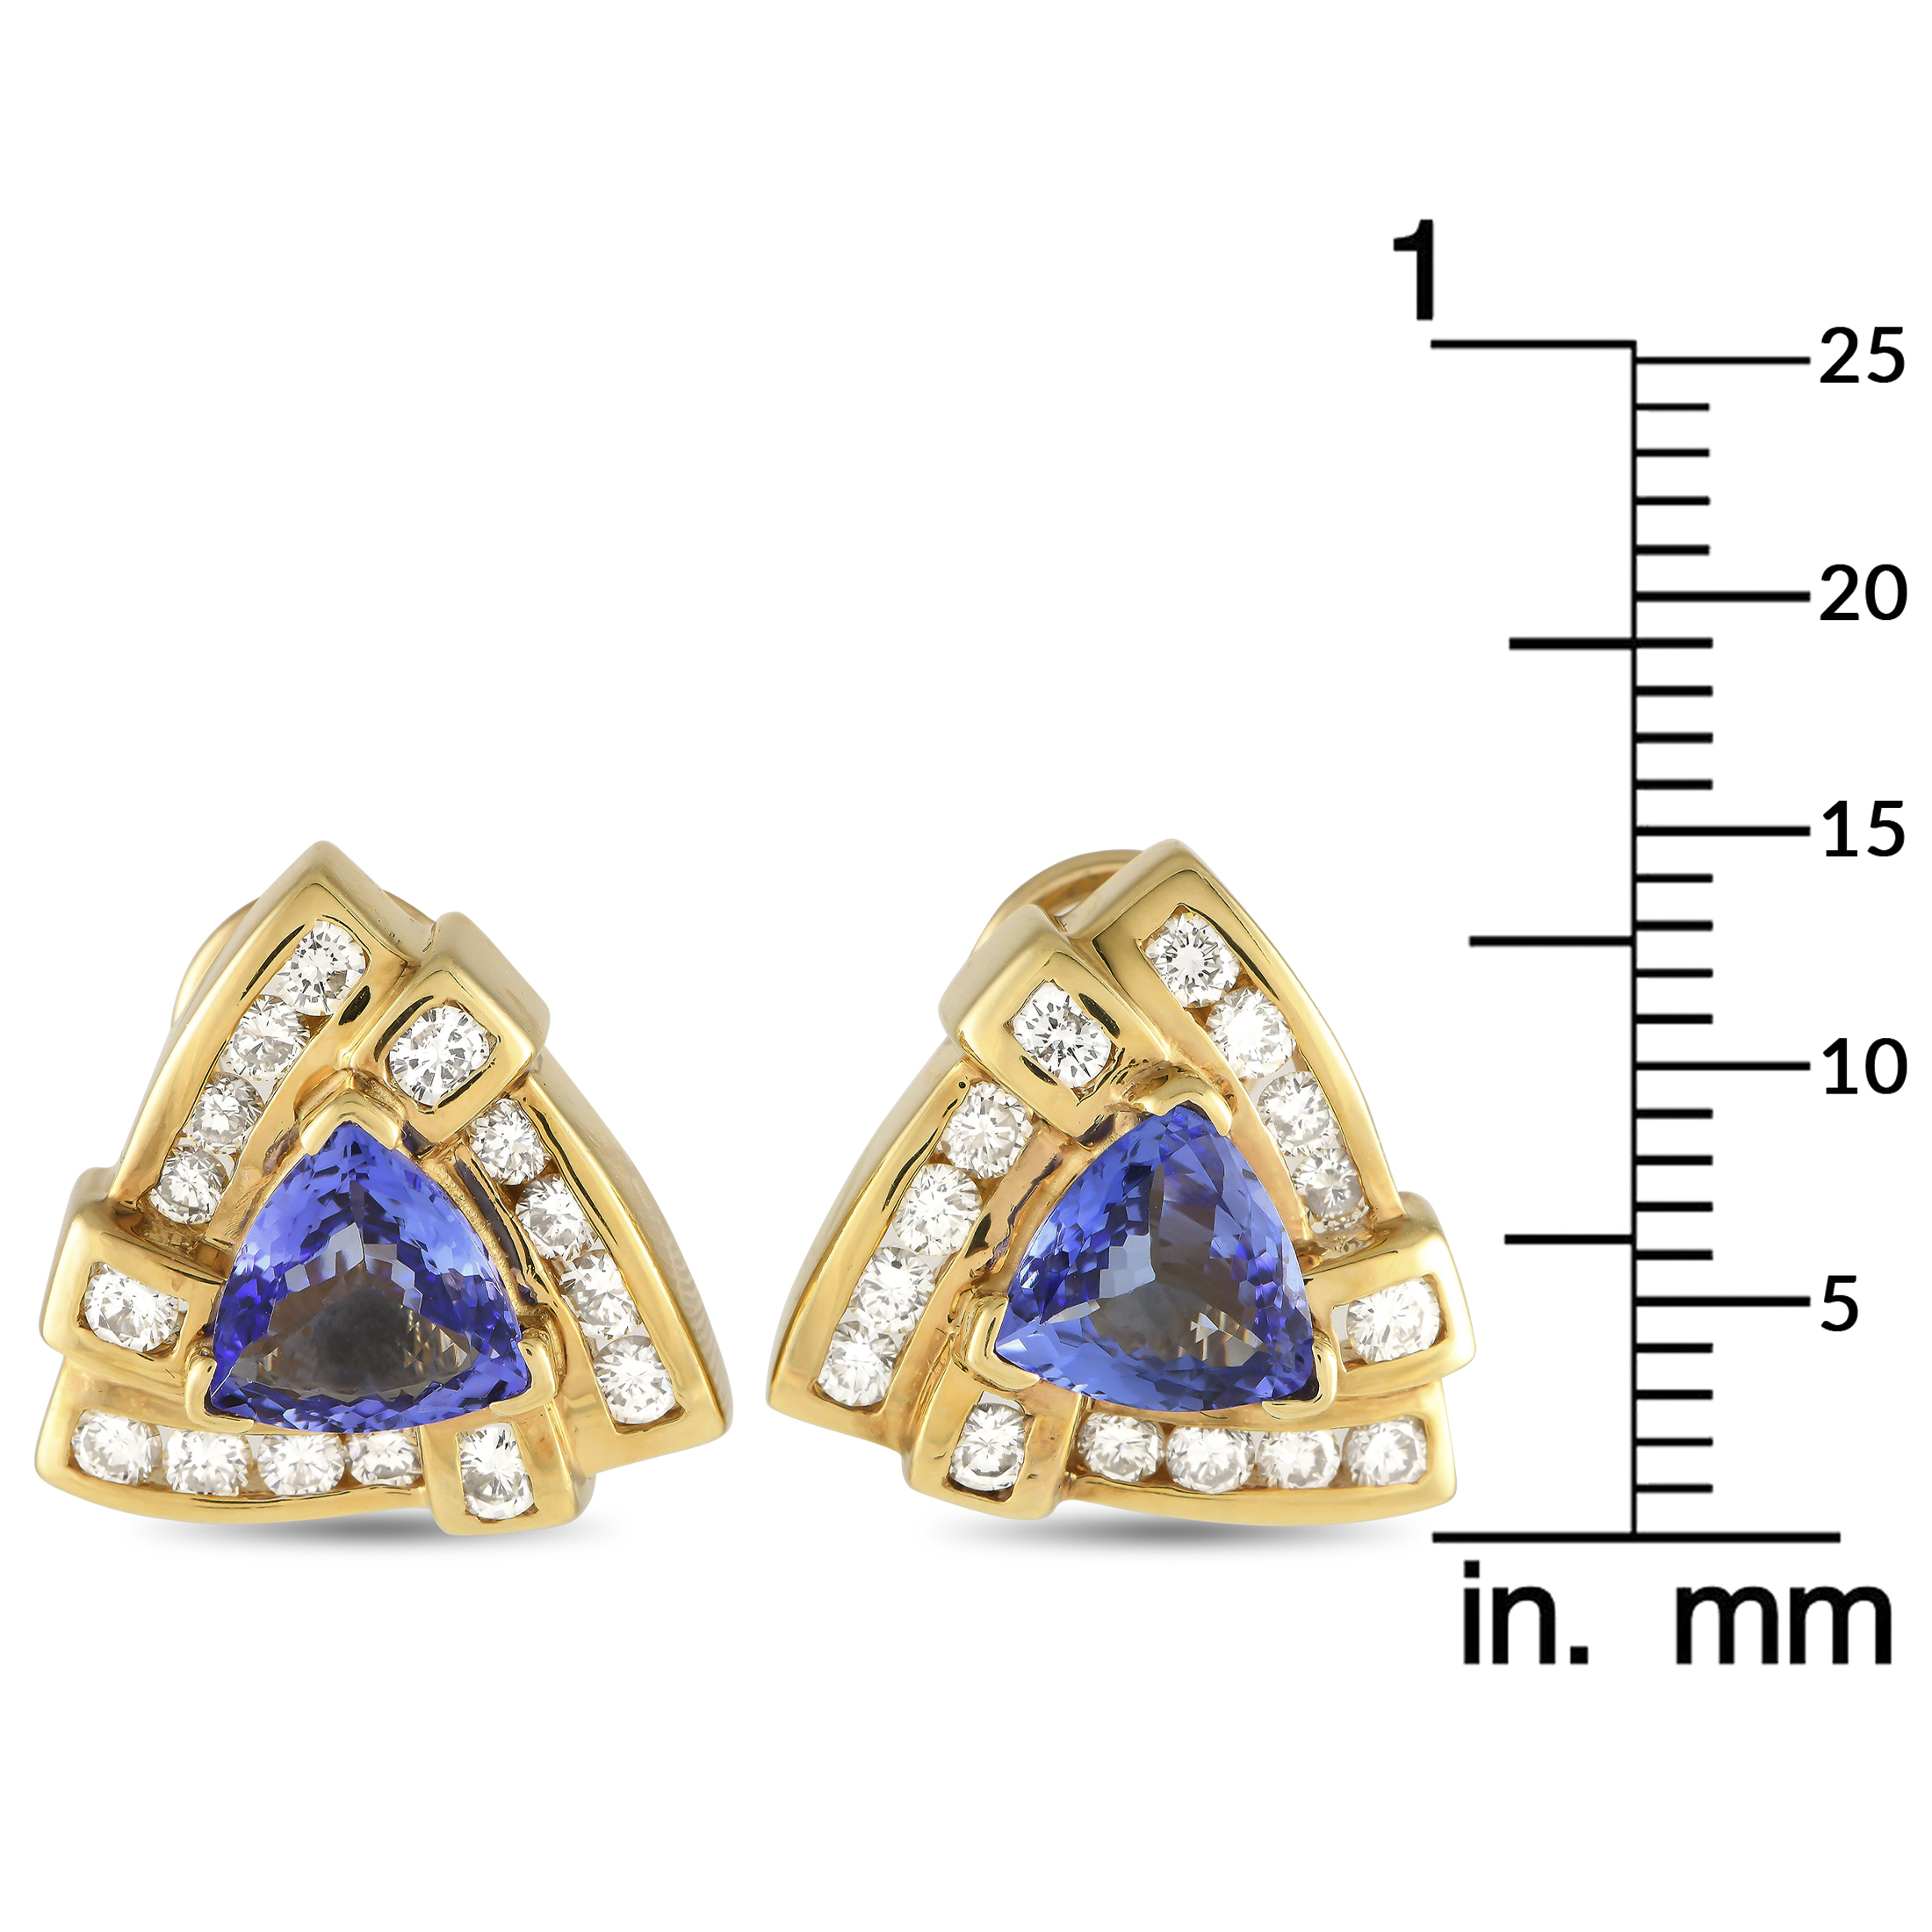 LB Exclusive 14K Yellow Gold Diamond and Tanzanite Earrings MF06-012424